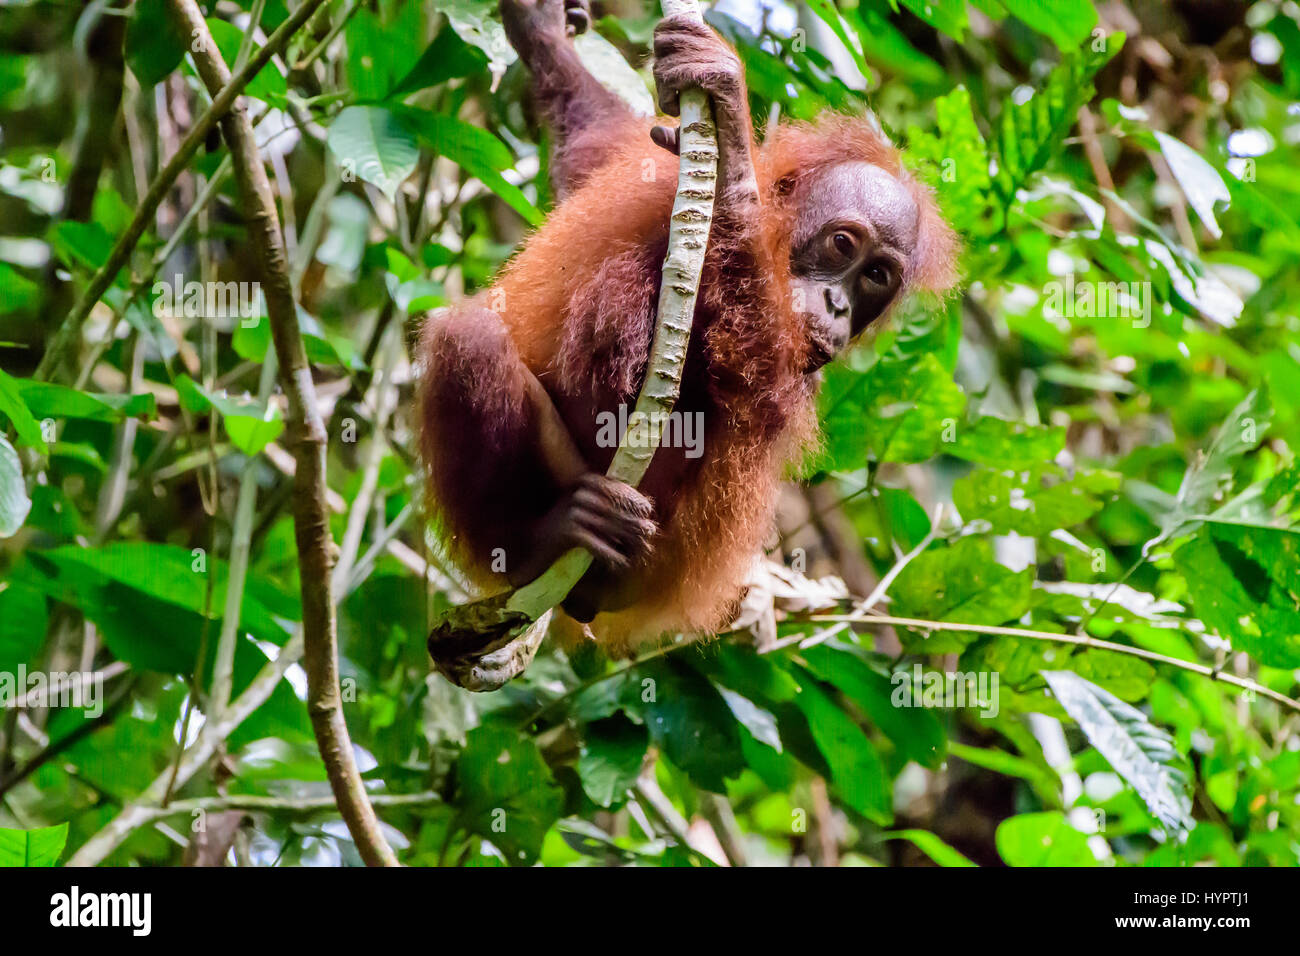 Baby Orangutan in the trees Stock Photo